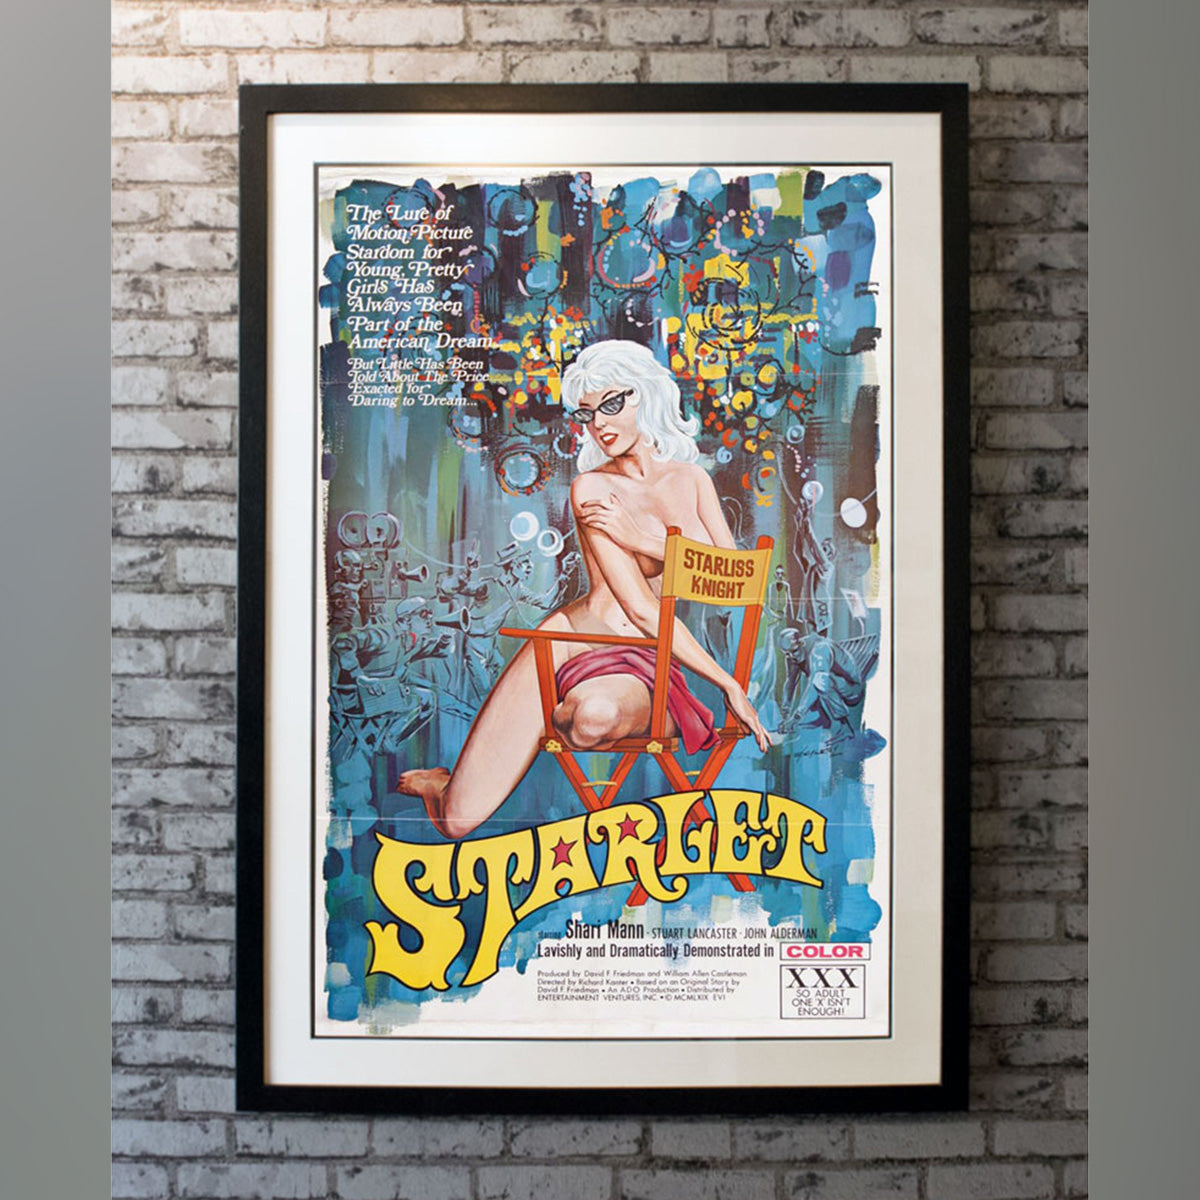 Original Movie Poster of Starlet! (1969)